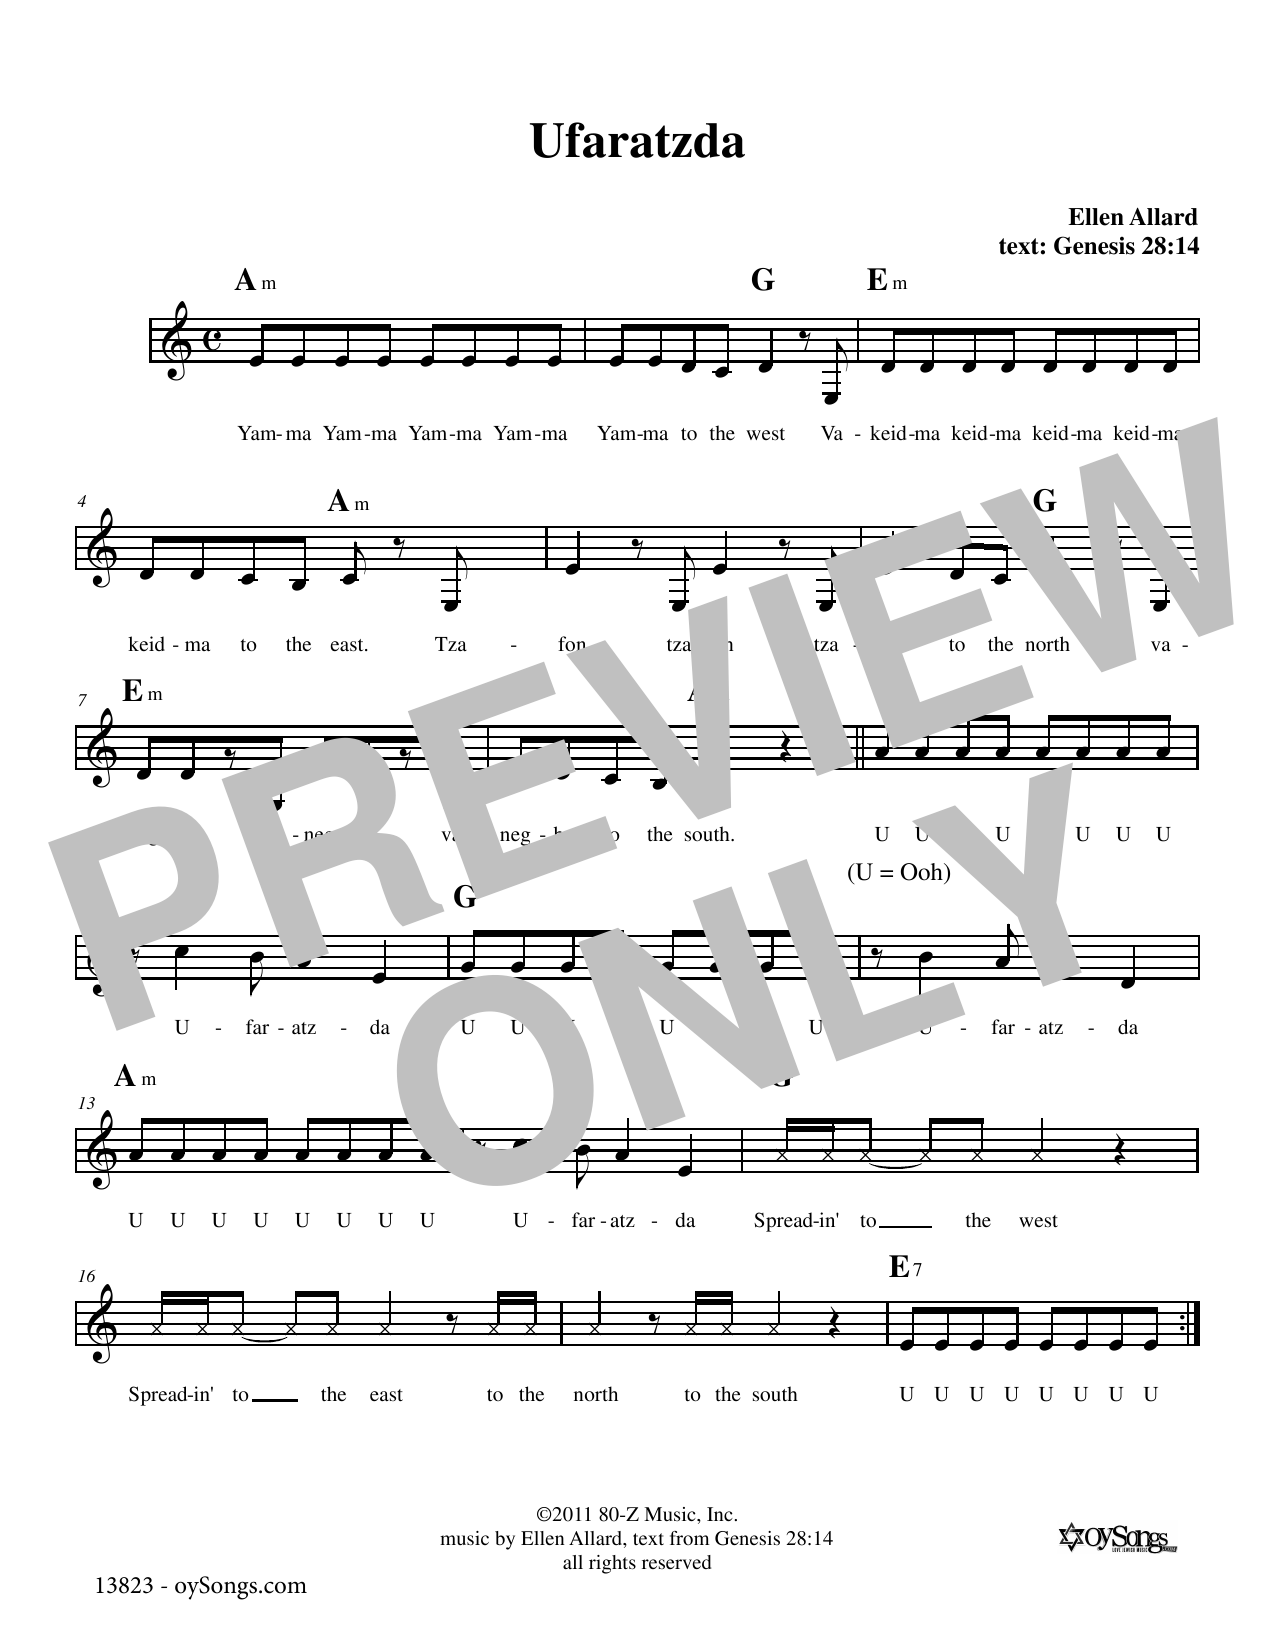 Ellen Allard Ufaratzda Sheet Music Notes & Chords for Melody Line, Lyrics & Chords - Download or Print PDF